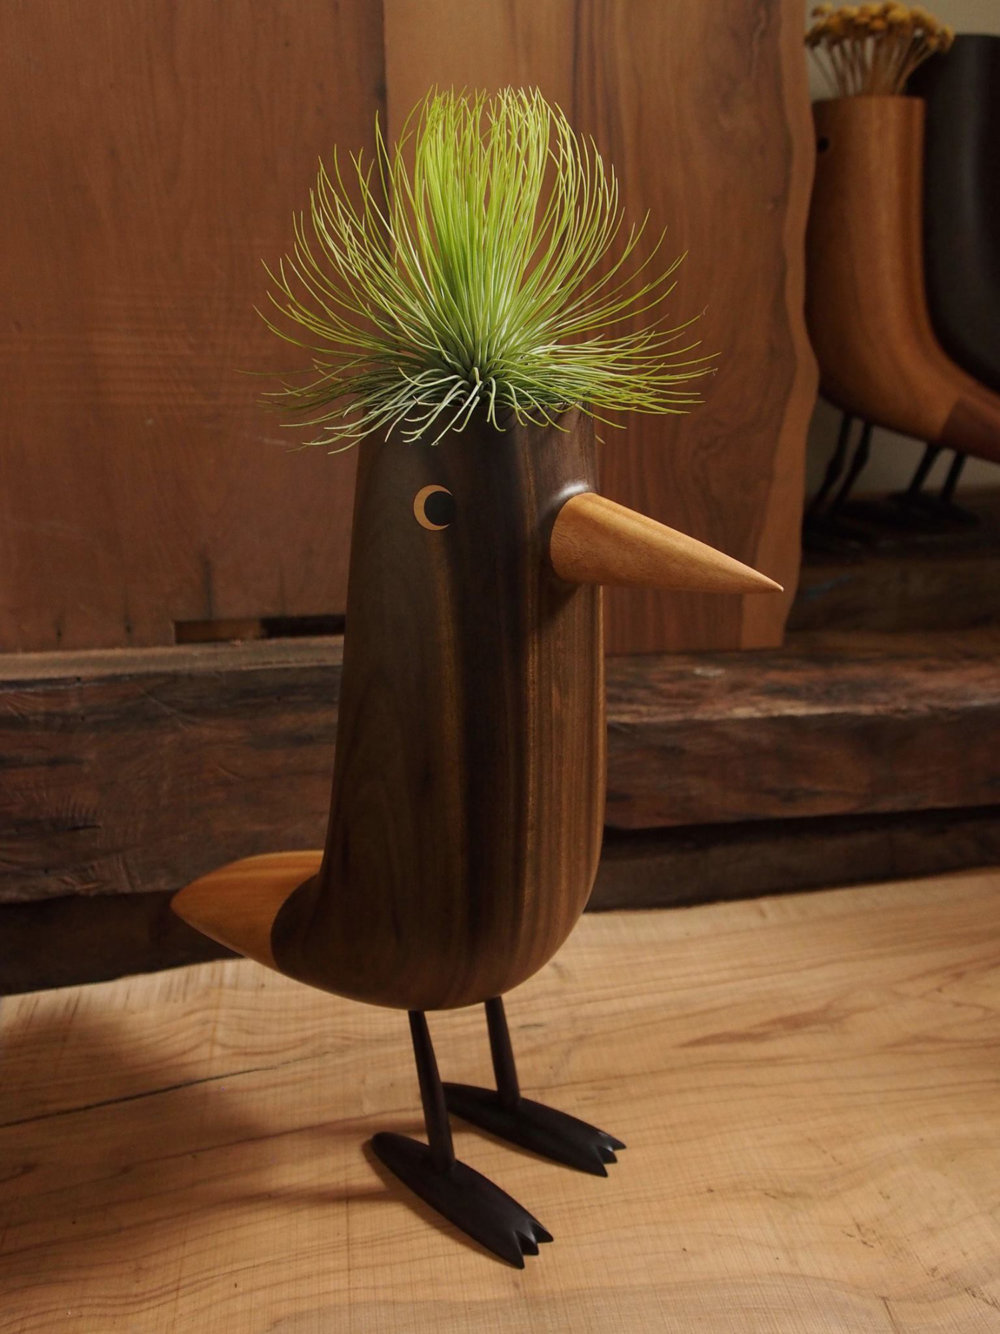 Peculiar Creatures Amusing Cartoon Like Wood Toys And Vases By Yen Jui Lin 2